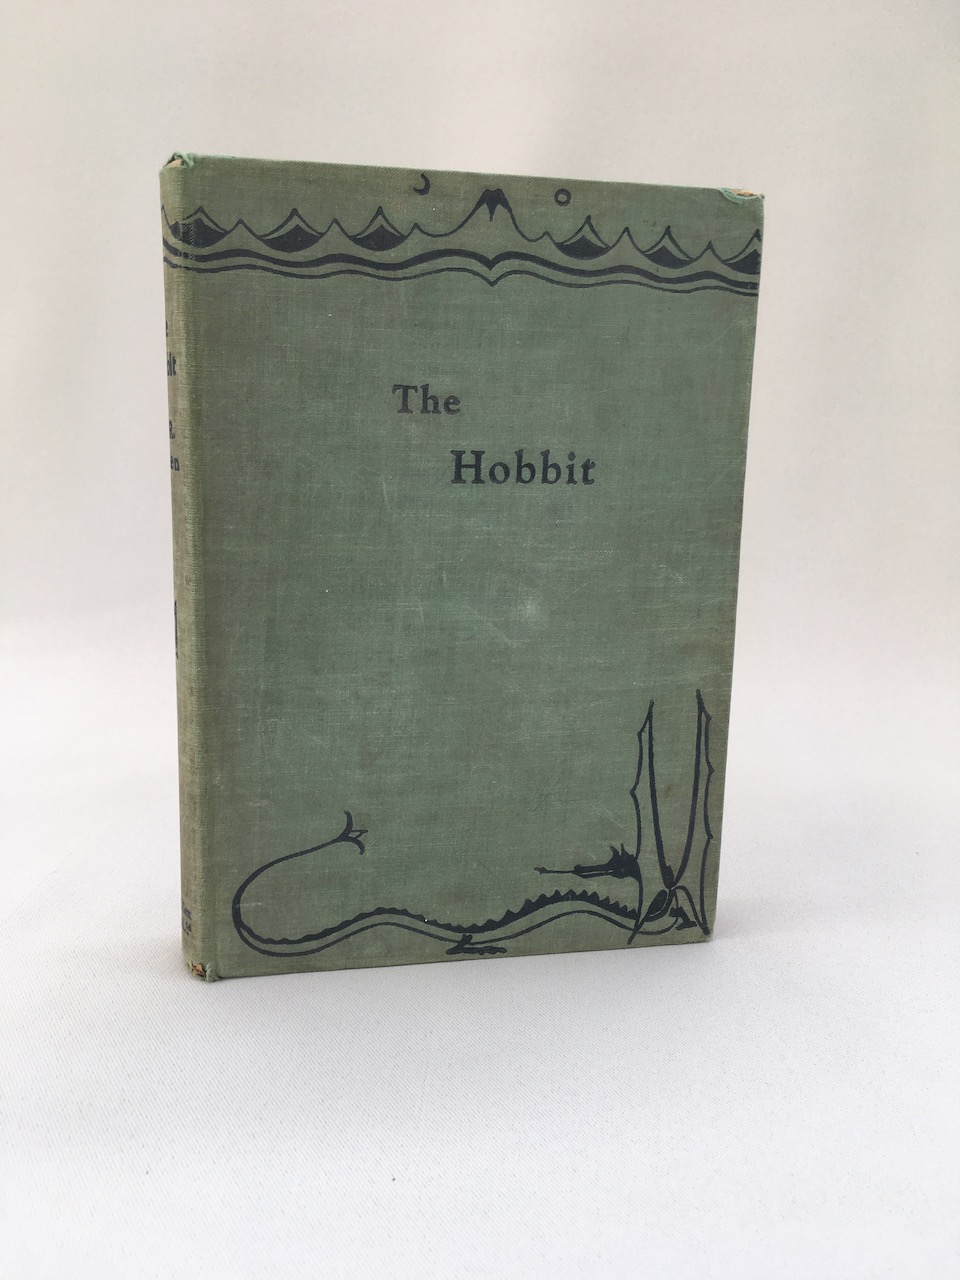 
The Hobbit, George Allen & Unwin, 1937 1st UK Edition 2nd impression 2